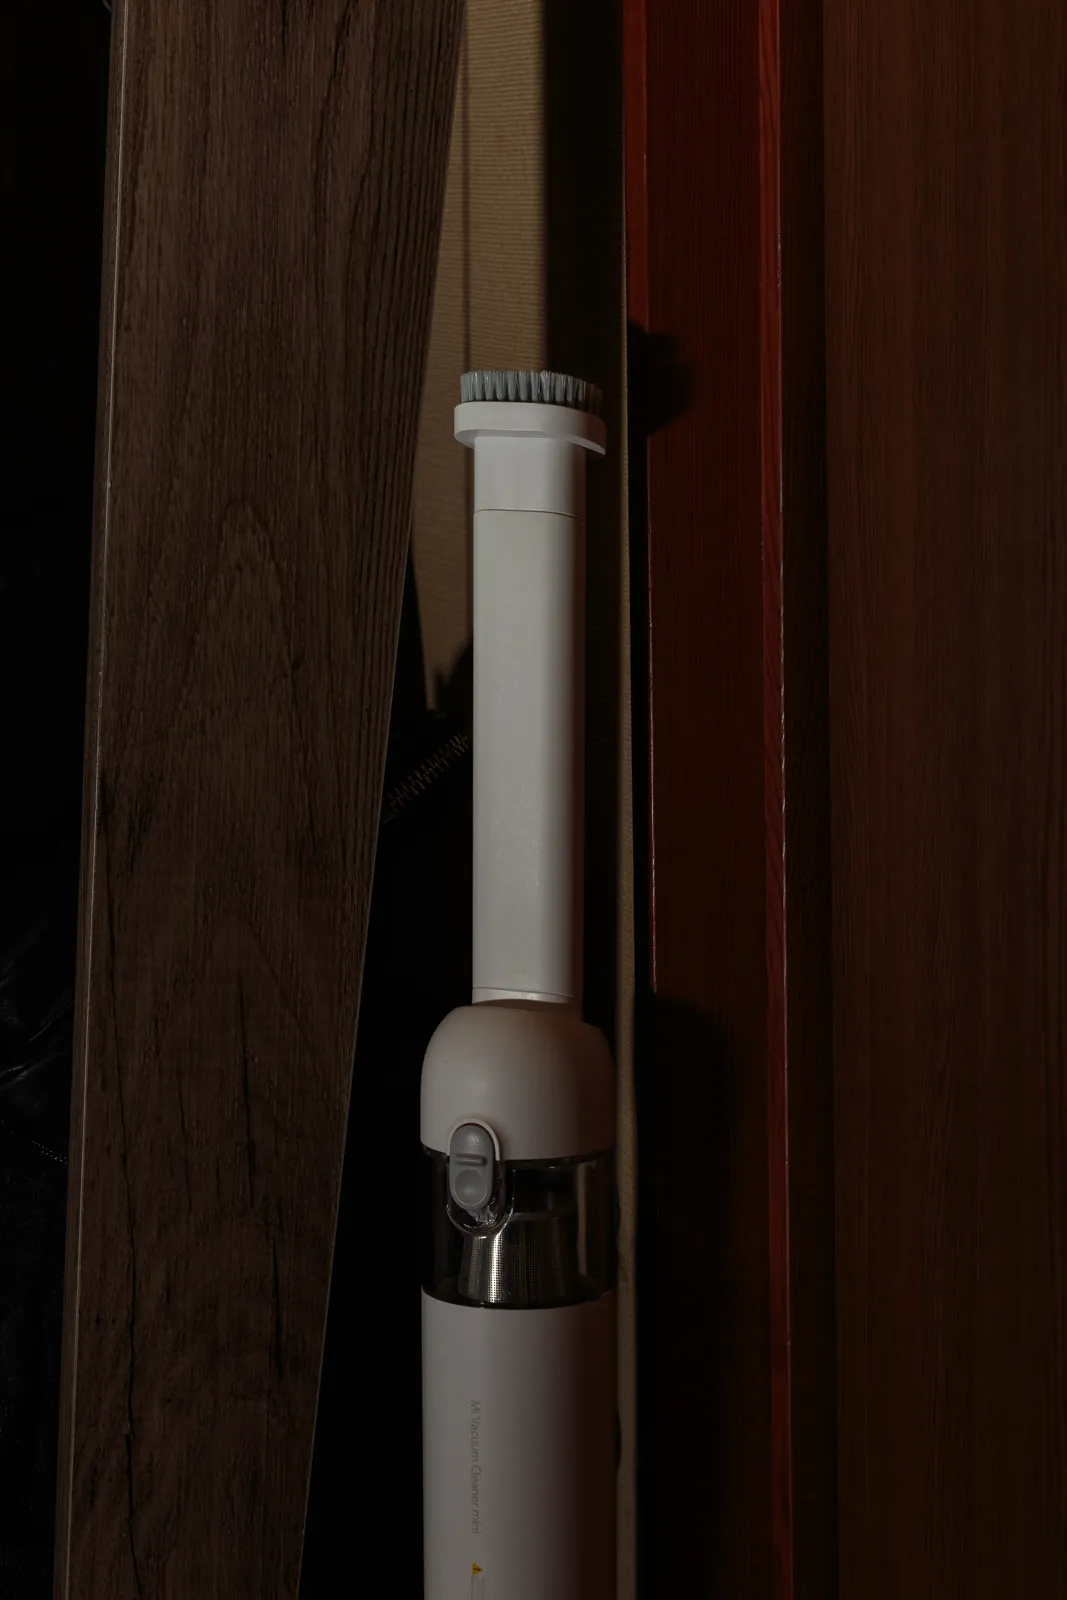 Mi Vacuum Cleaner Miniは小型なので部屋のちょっとした隙間に置いておける